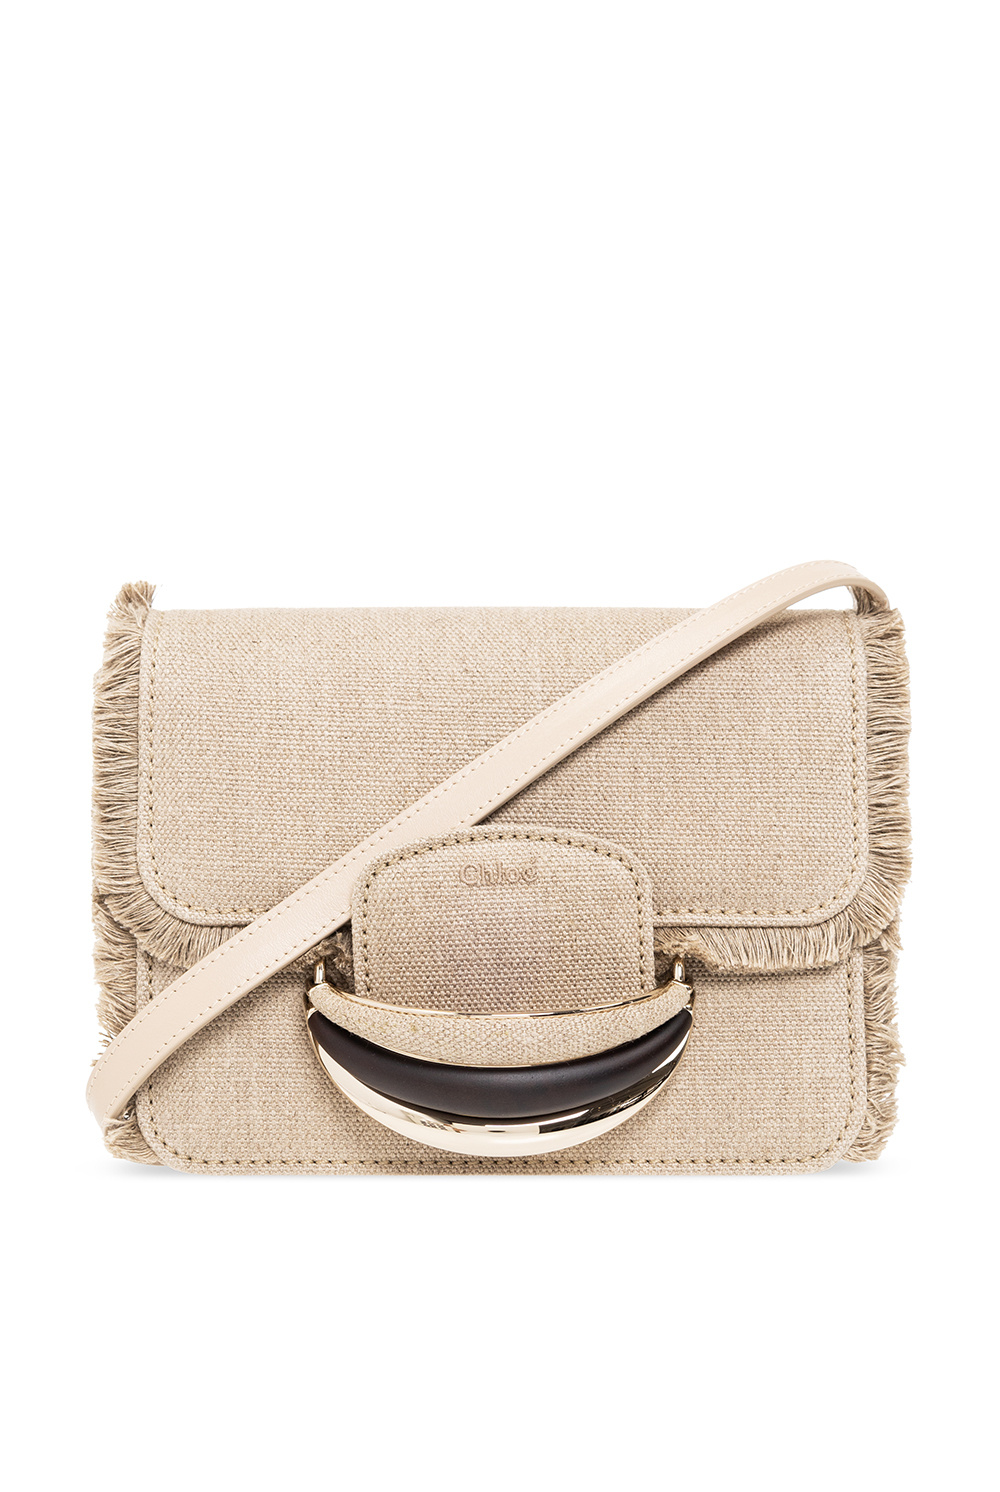 Chloé 'Kattie Small' shoulder bag | Women's Bags | Vitkac